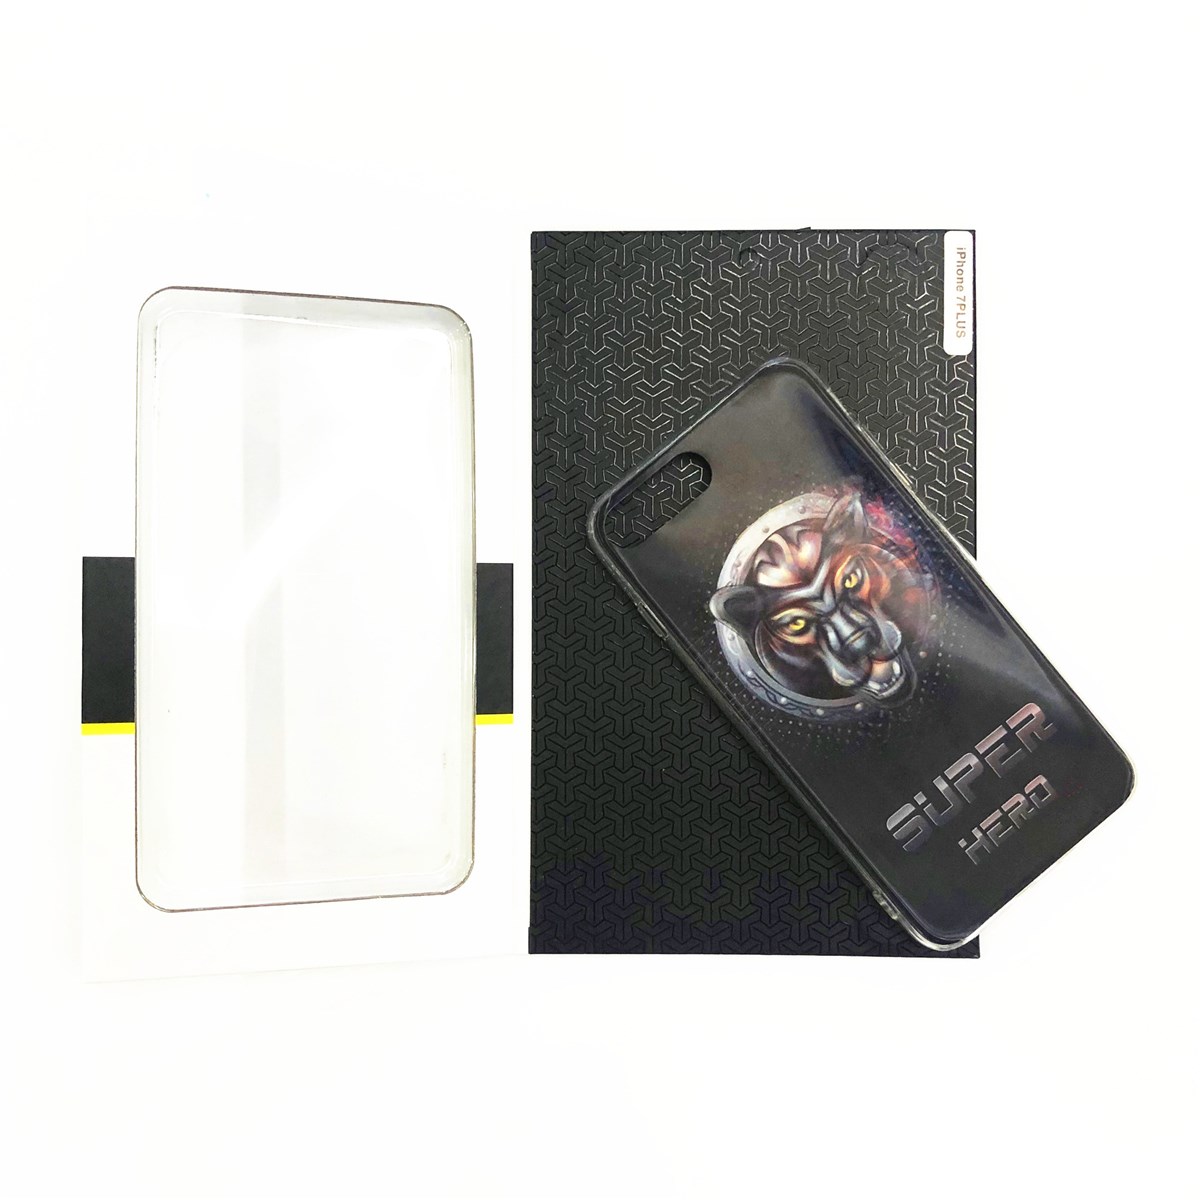 3D lenticular printing phone cases